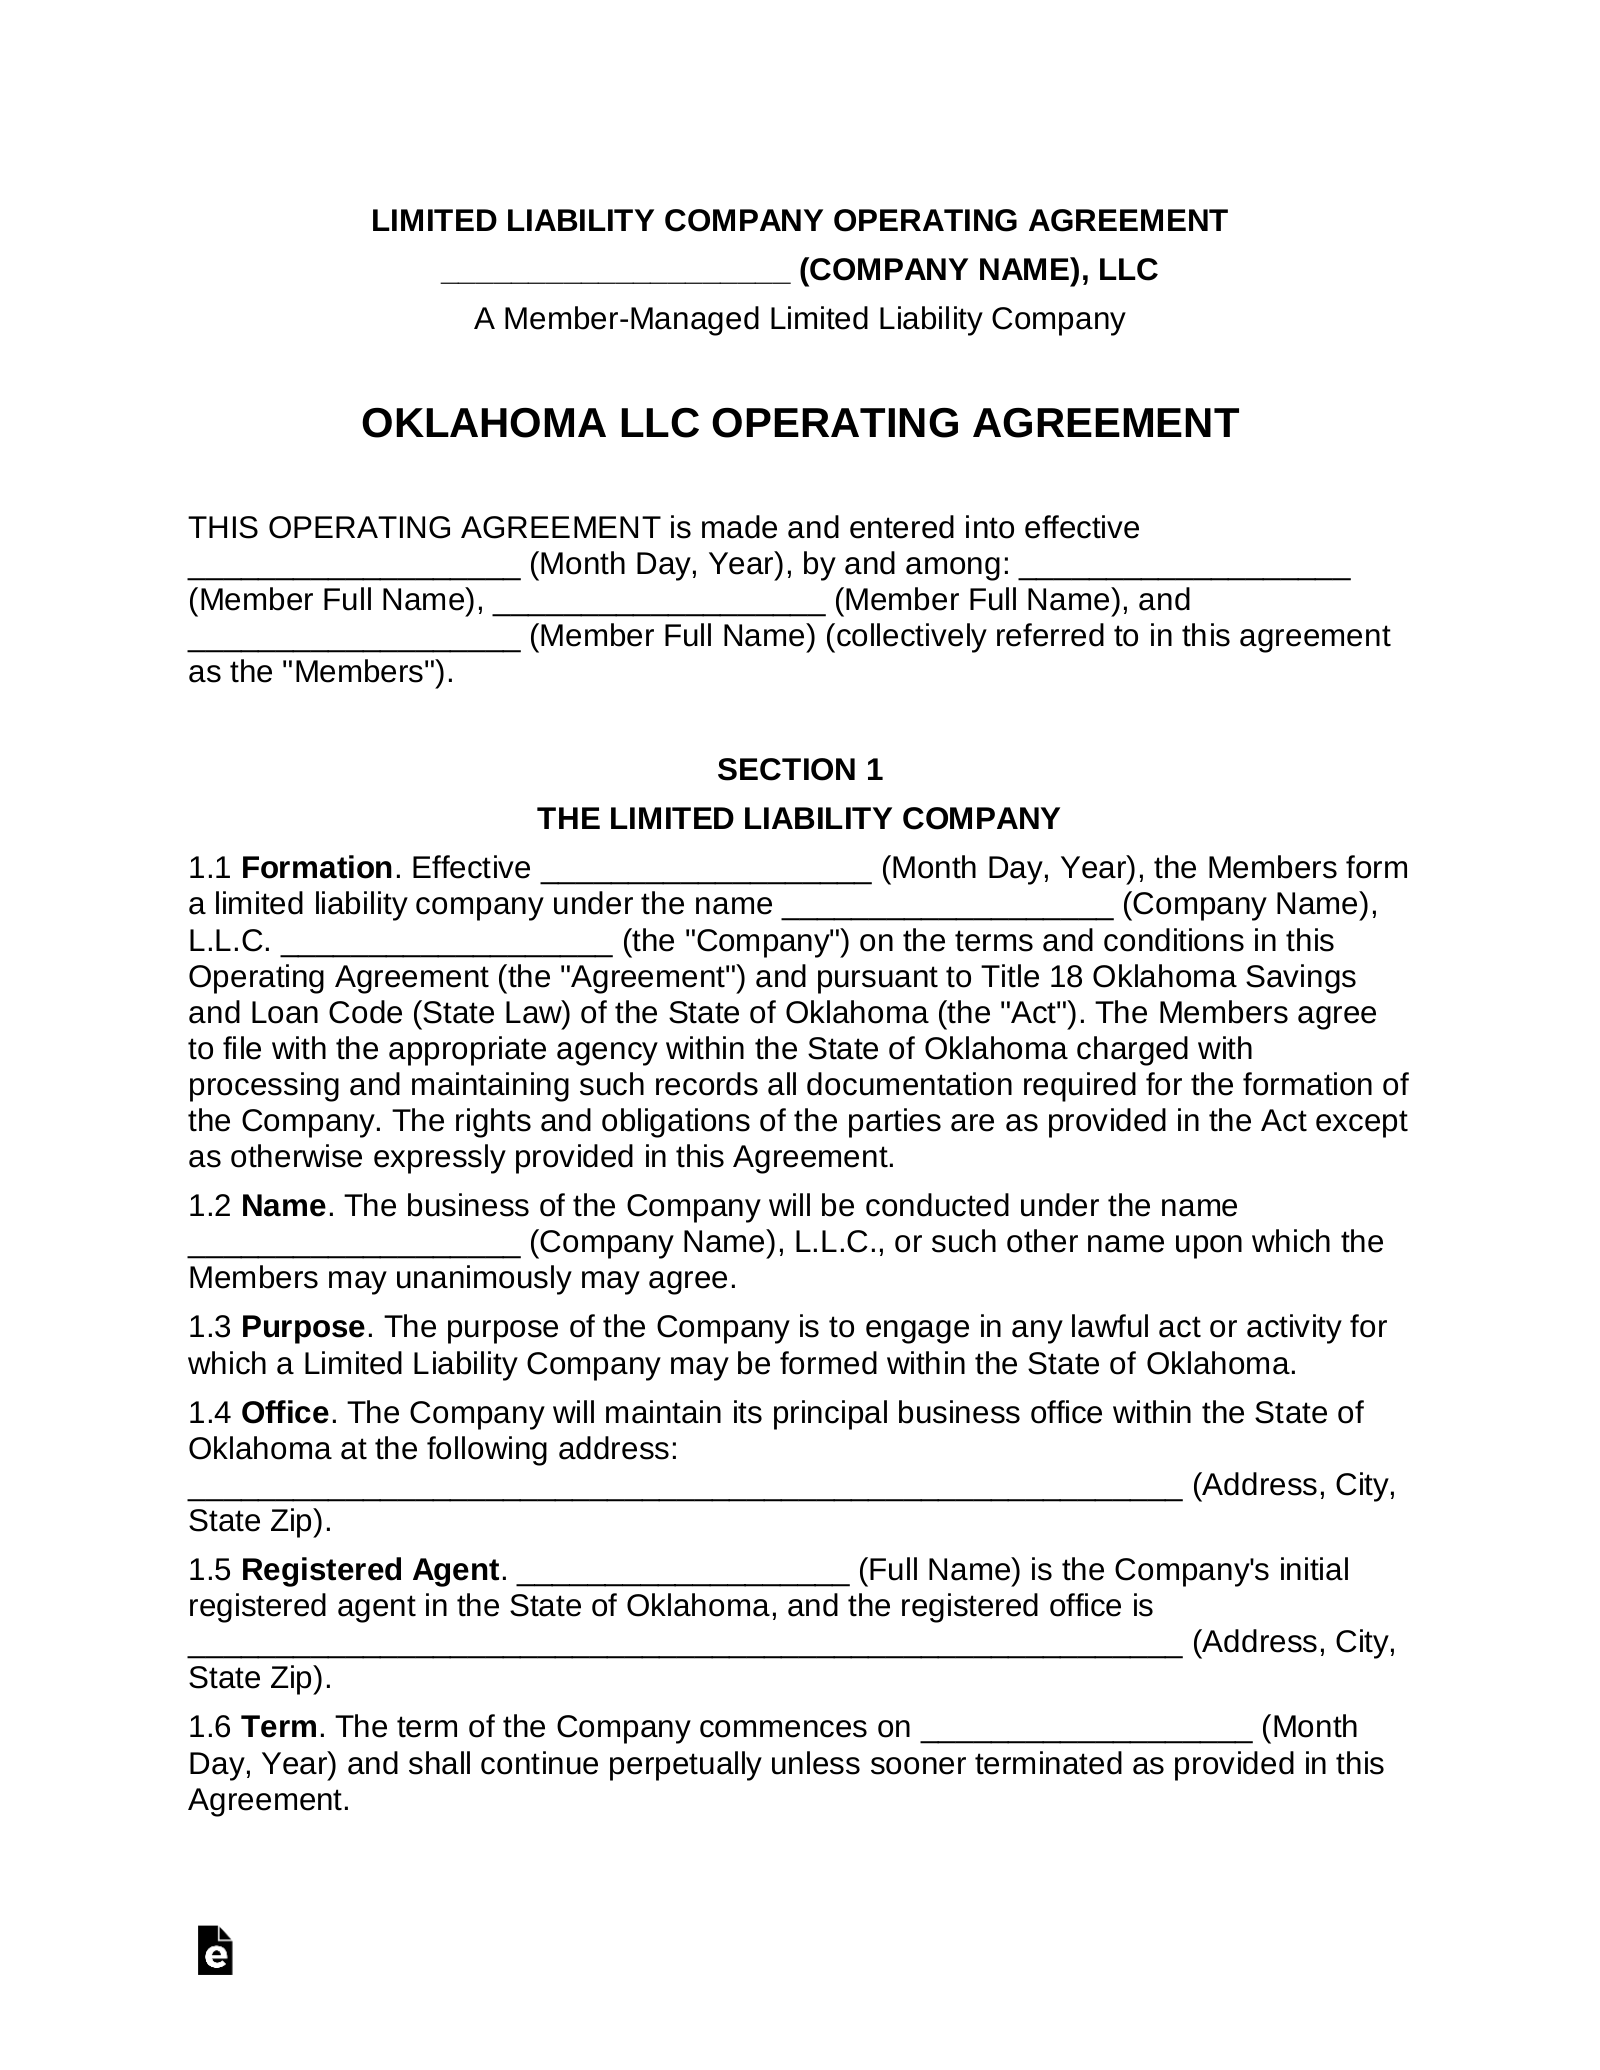 Oklahoma Multi-Member LLC Operating Agreement Form